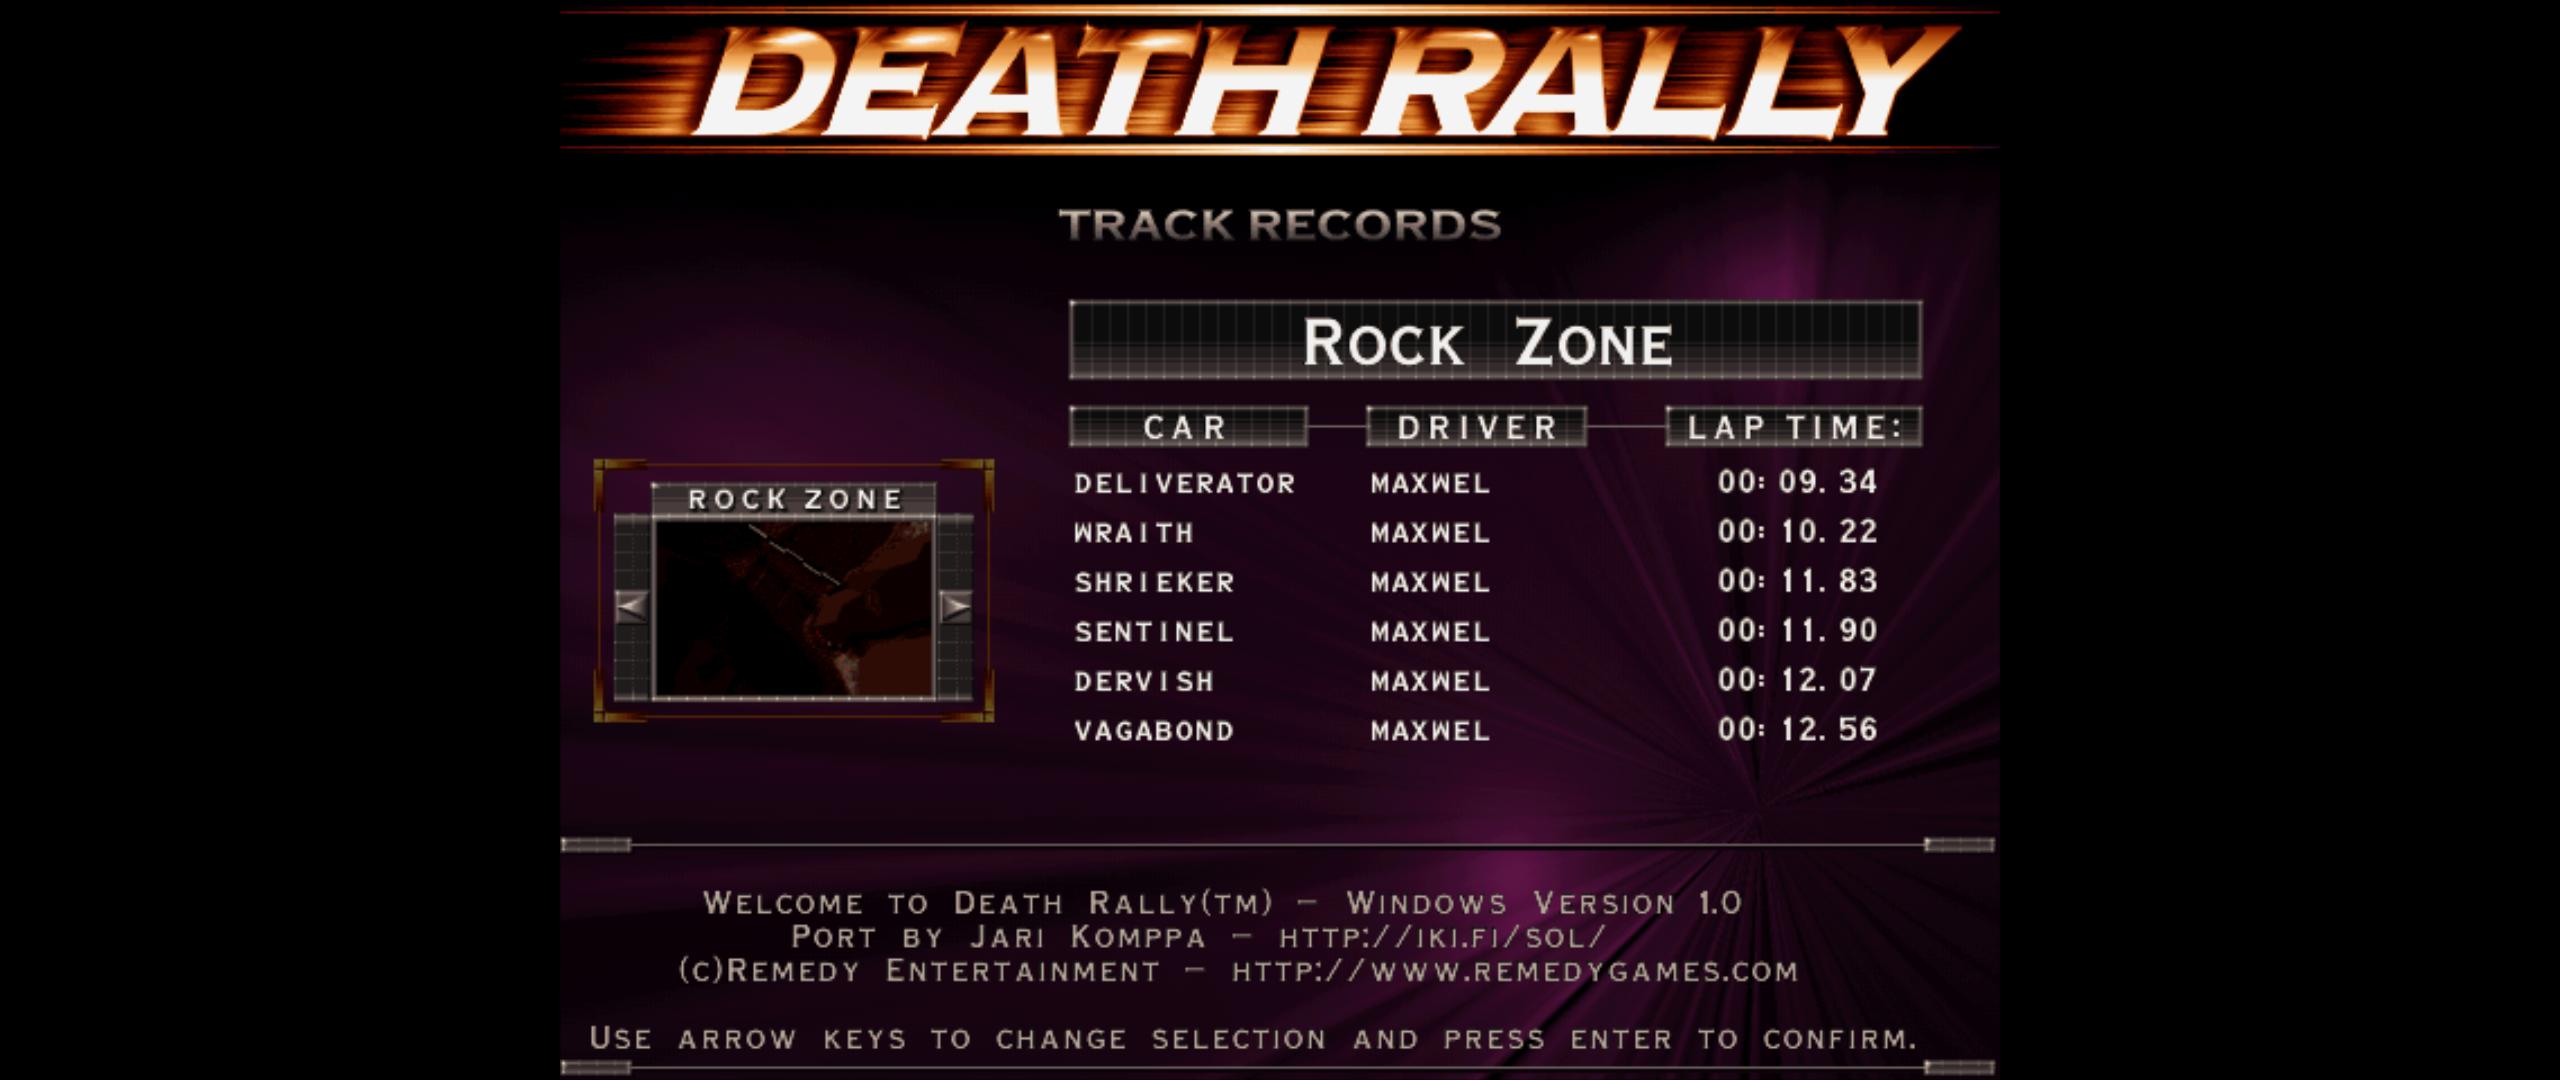 Maxwel: Death Rally [Rock Zone, Sentinel Car] (PC) 0:00:11.9 points on 2016-03-03 01:52:53